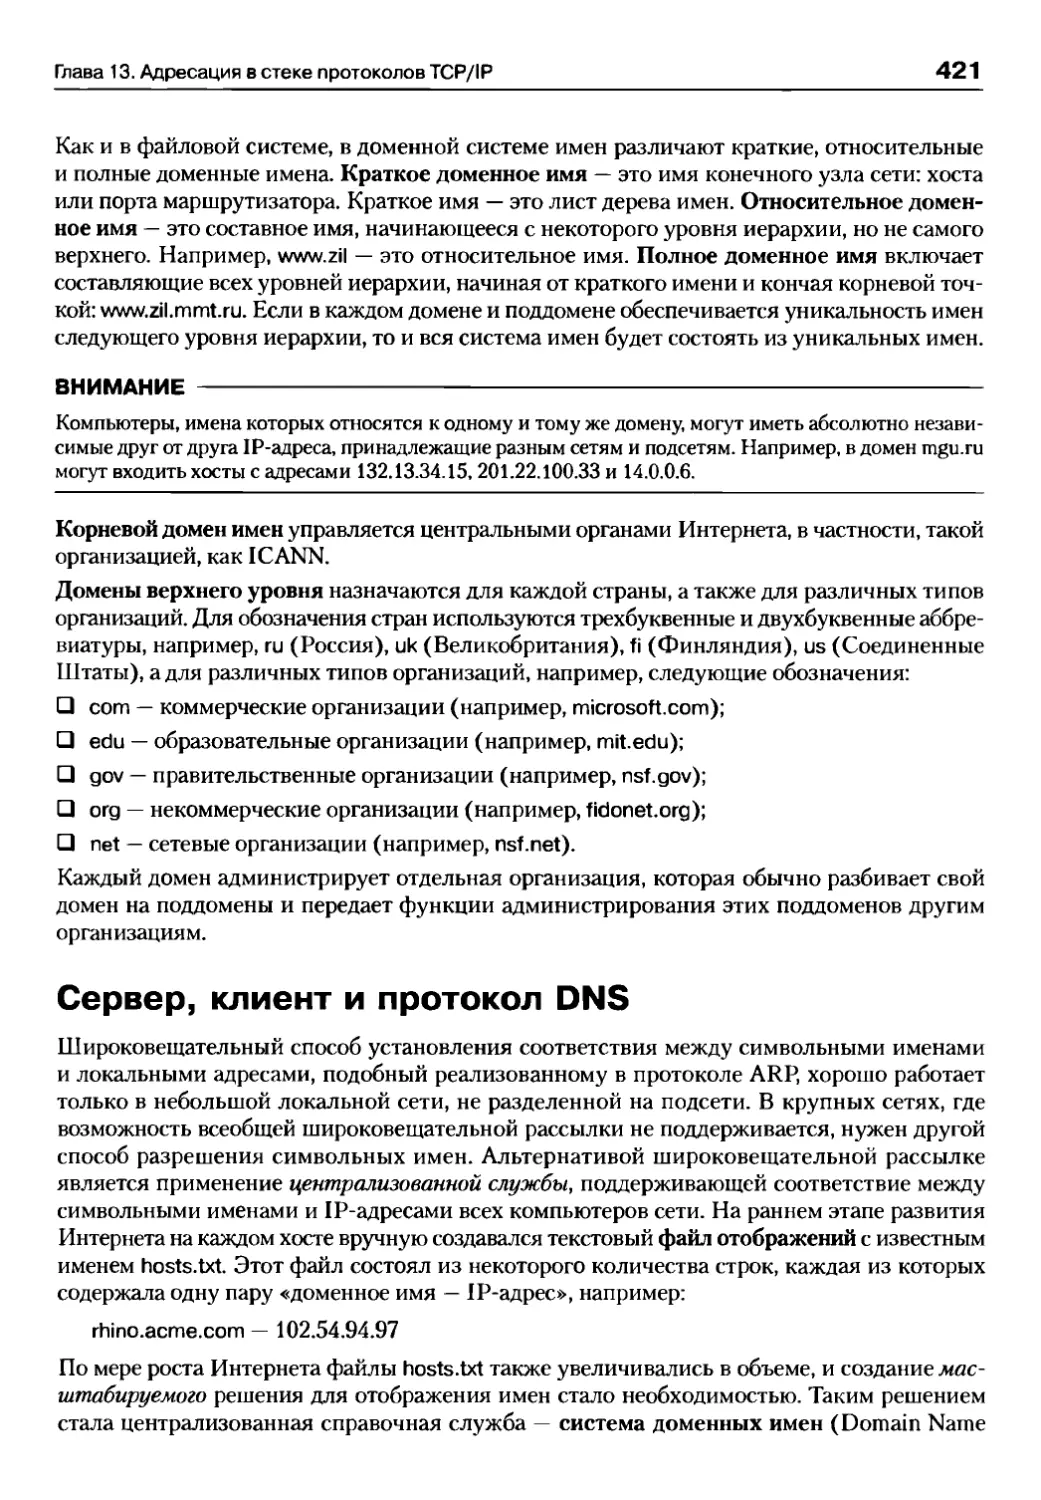 Сервер, клиент и протокол DNS